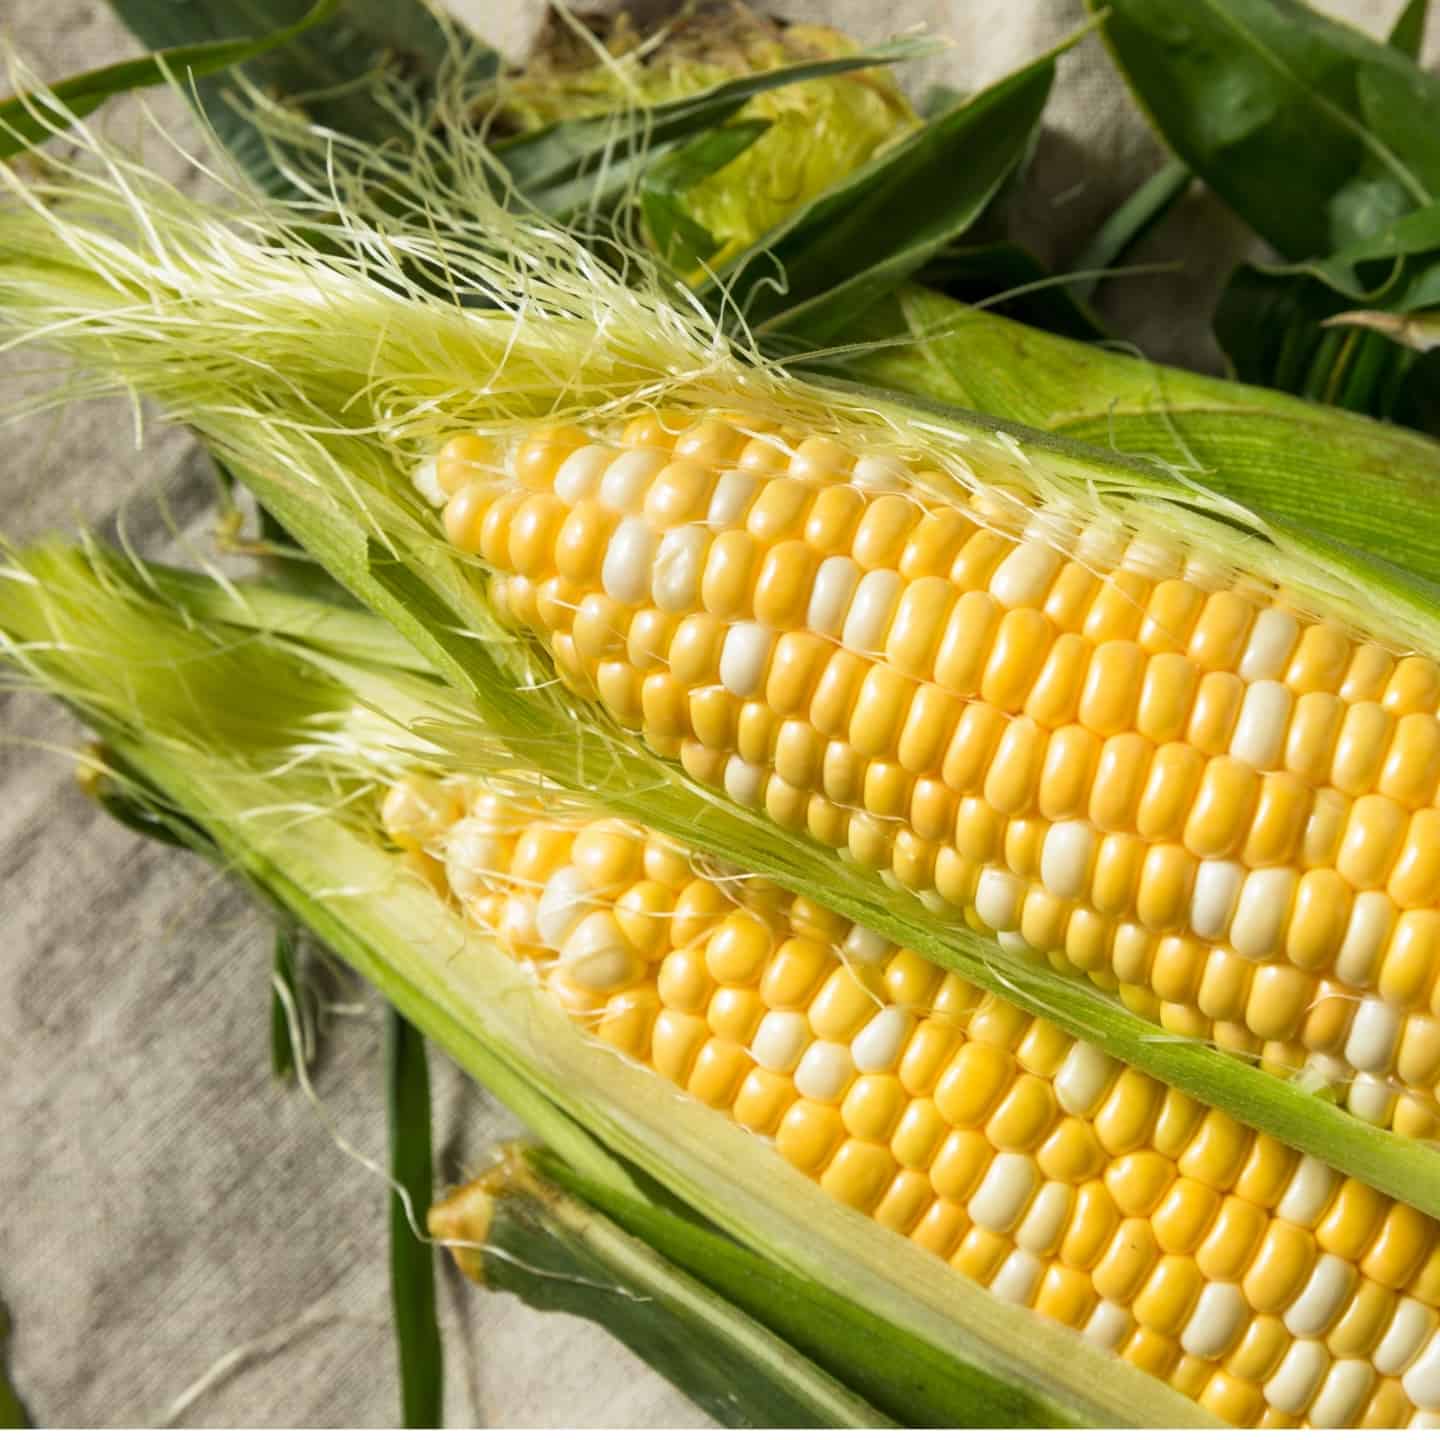 How to identify fresh corn on the cob